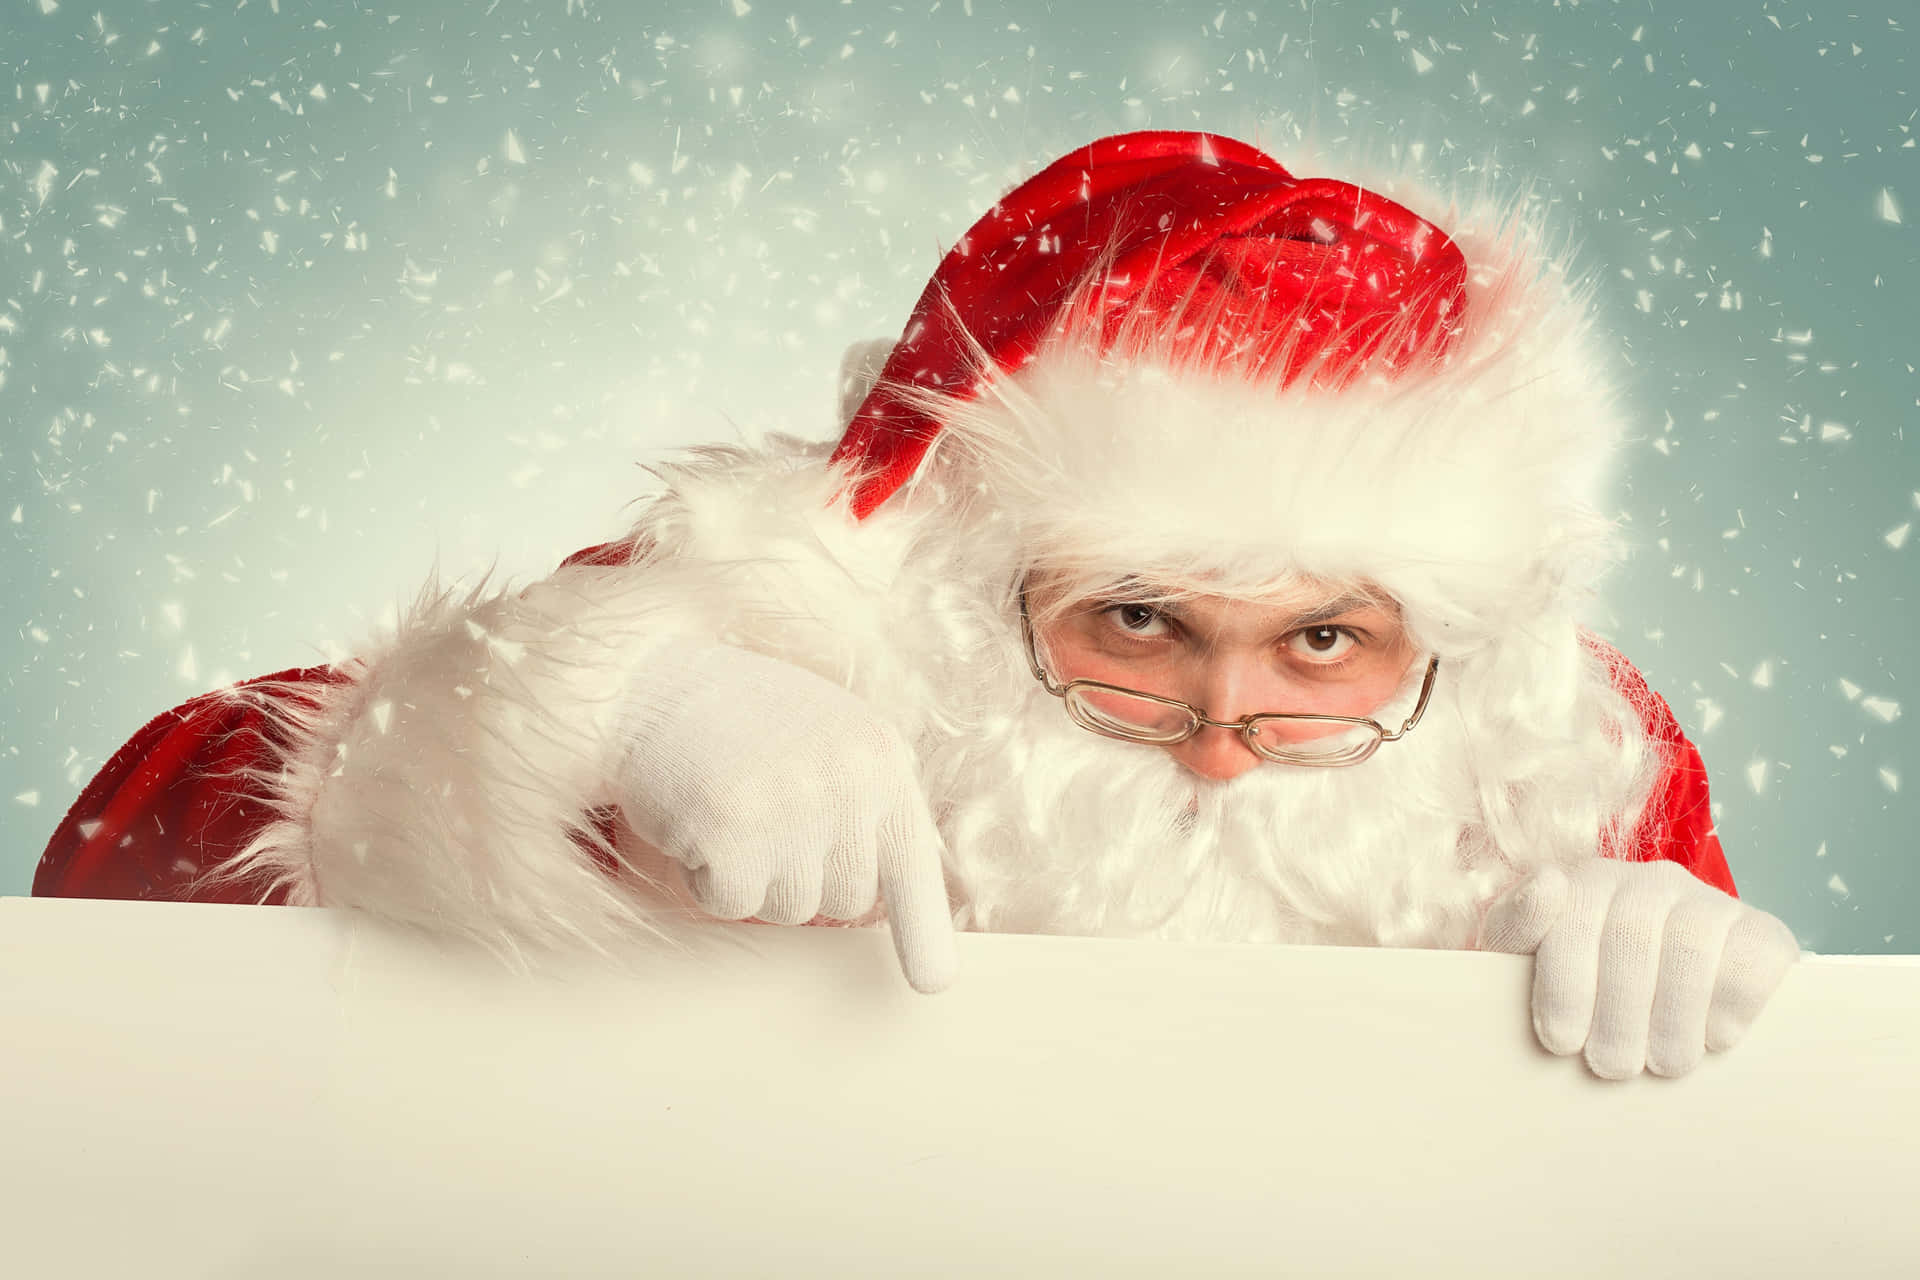 Ho, Ho, Ho - Santa Claus Wishing Everyone a Very Merry Christmas! Wallpaper